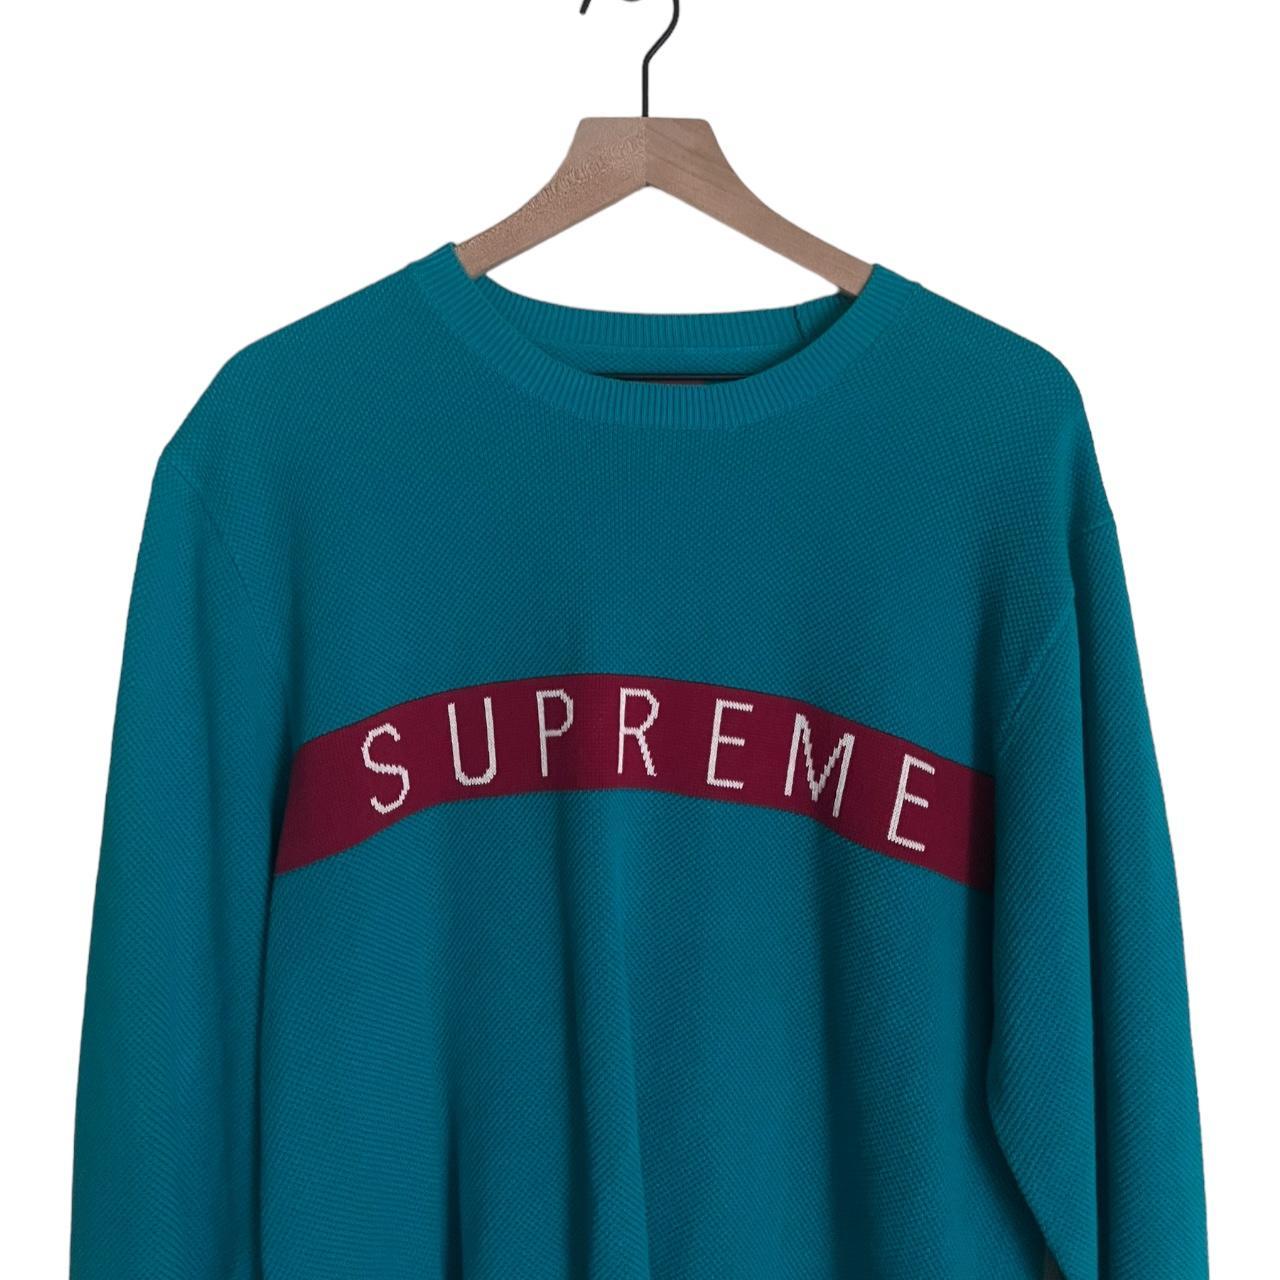 supreme blue sweater